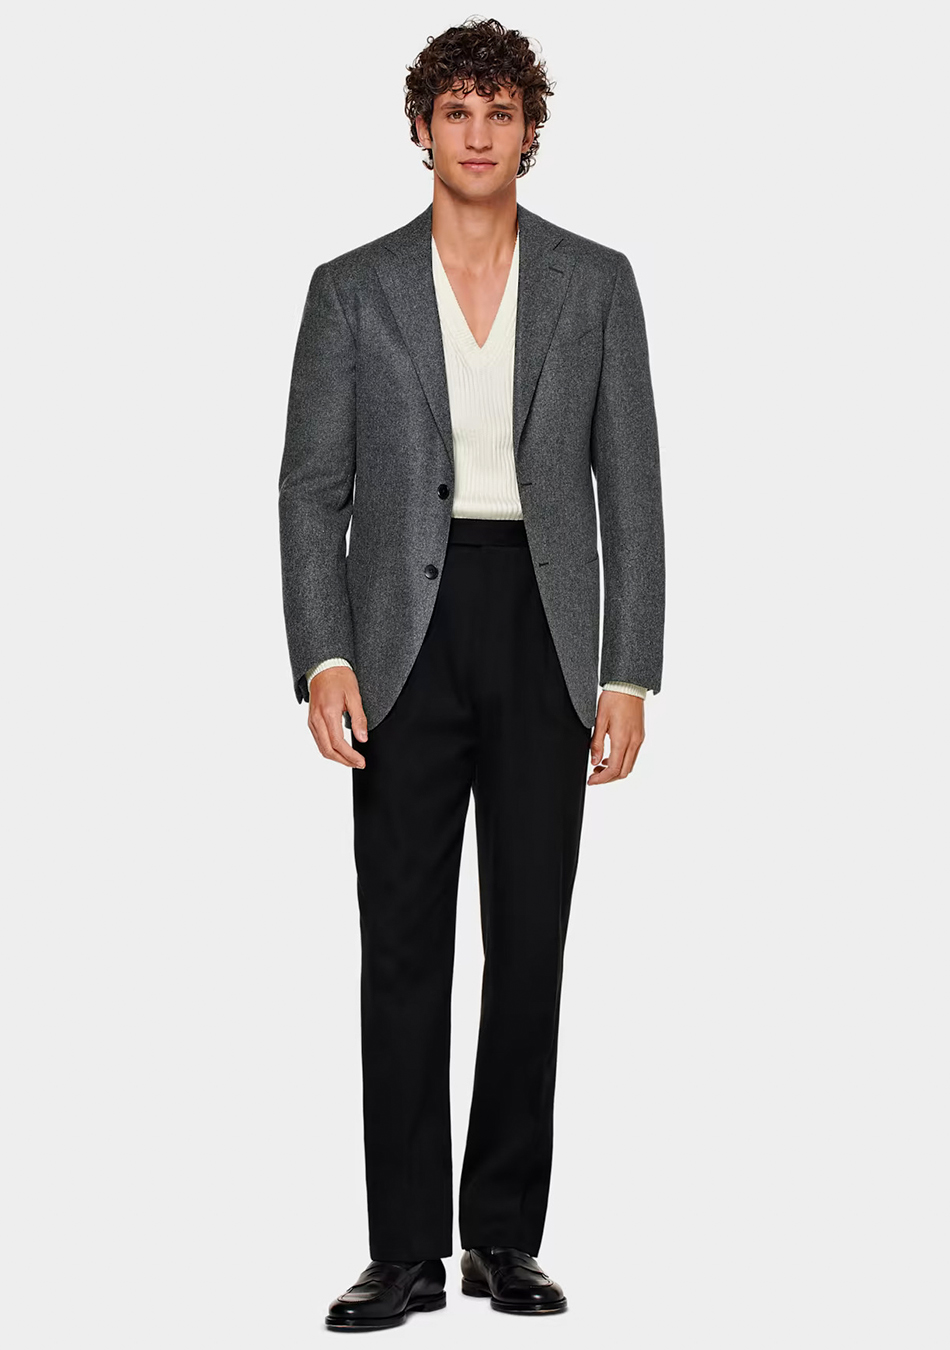 Man With Style | Grey blazer, Red turtleneck, Black trouser